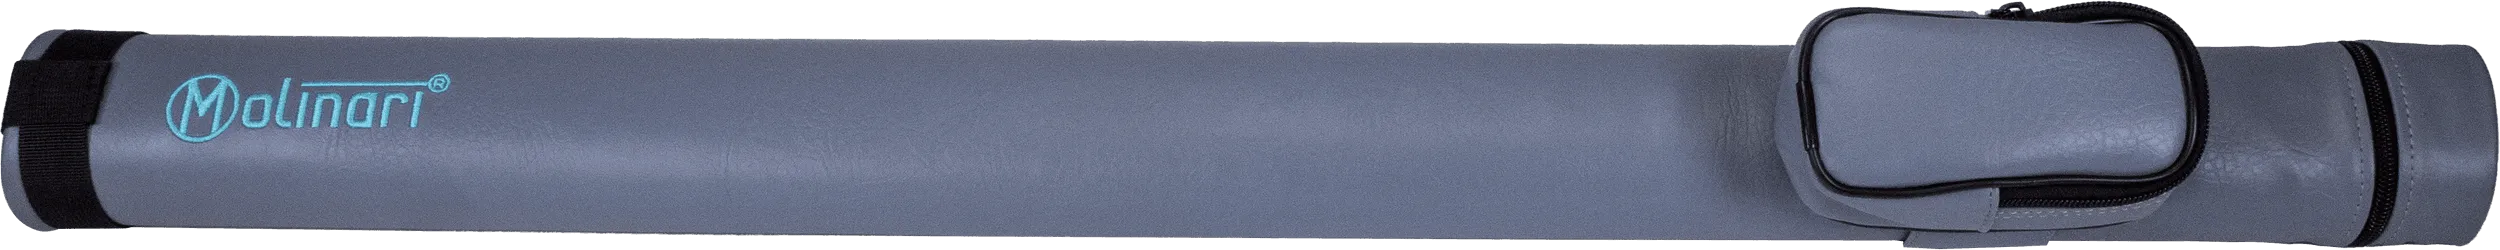 Molinari® retro cue tube in grey color, front view